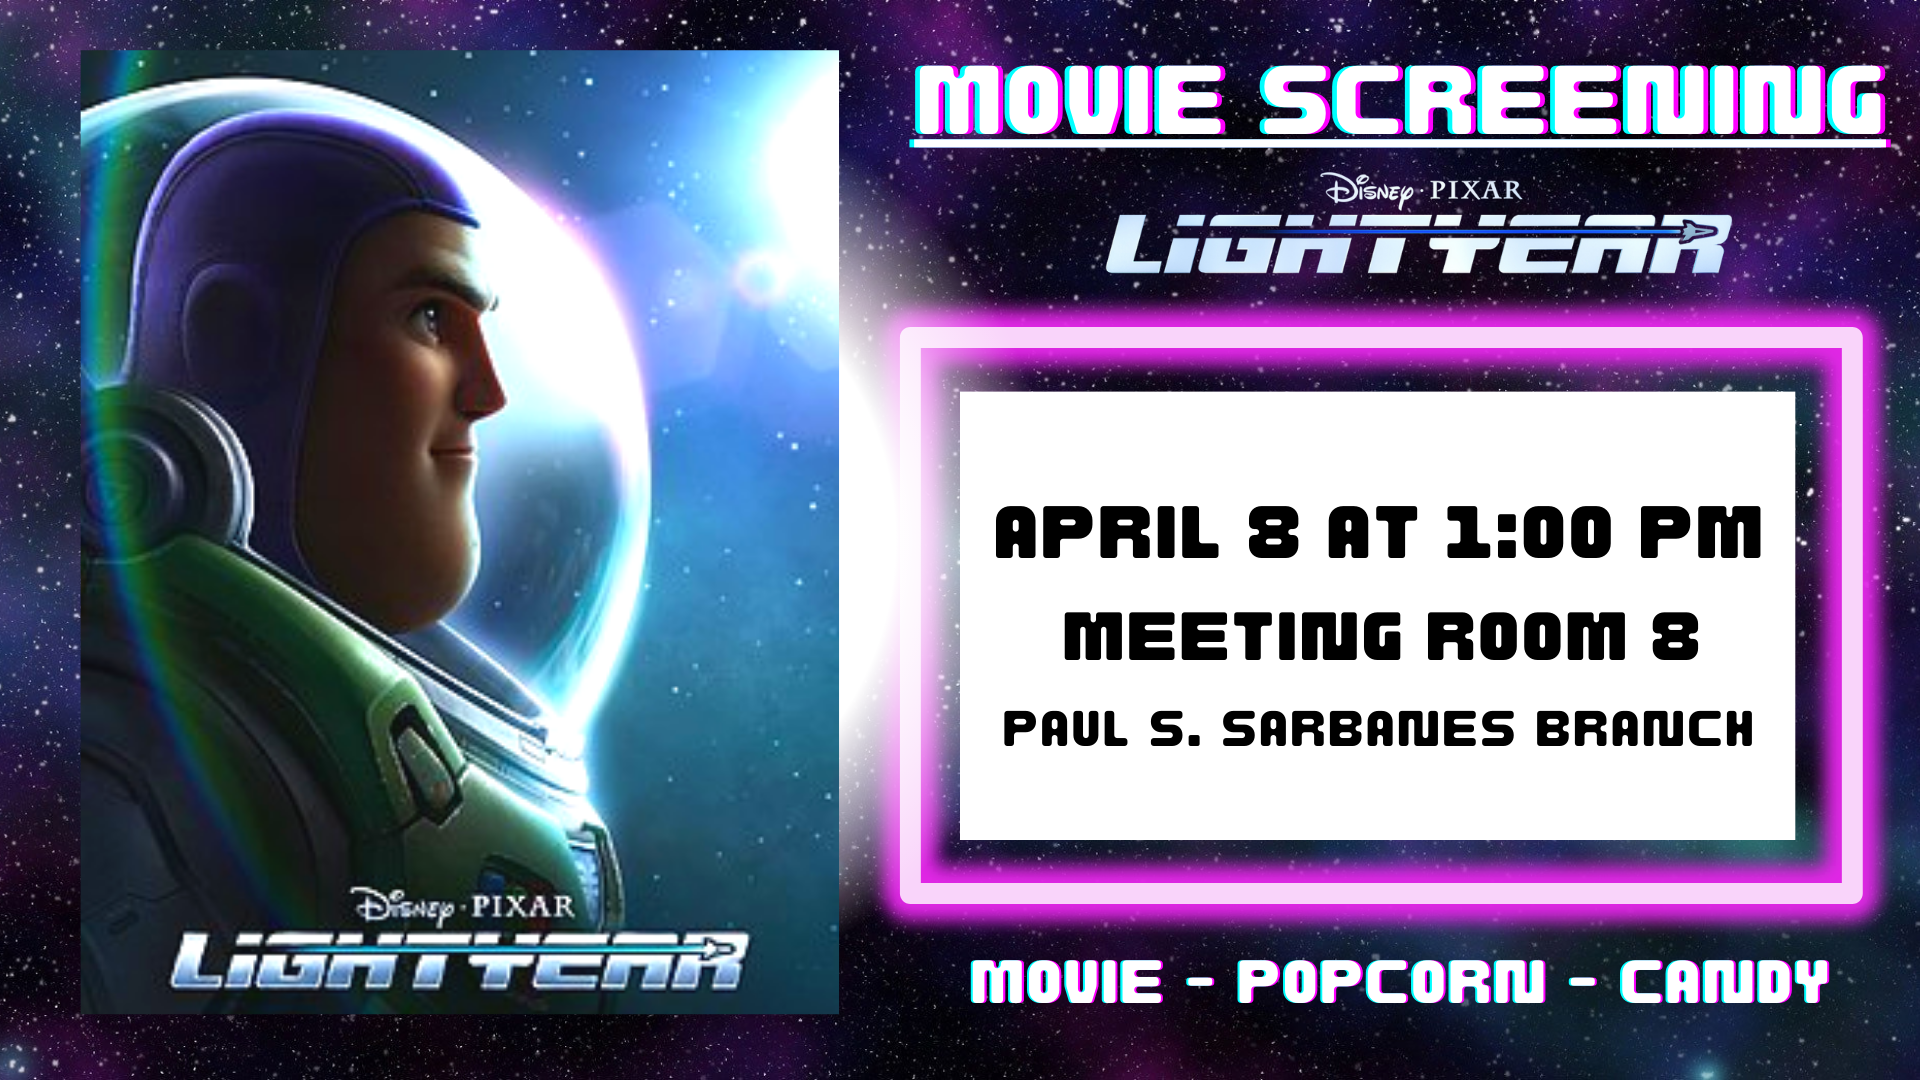 Movie Screening-Lightyear